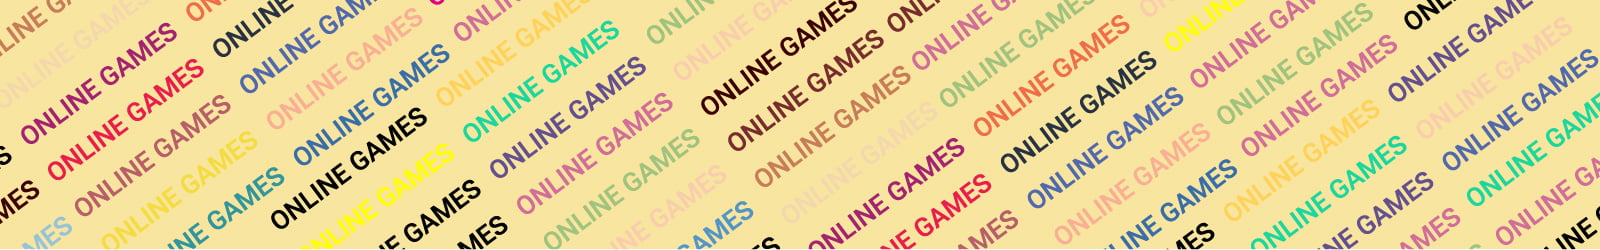 Online Games Banner Yellow